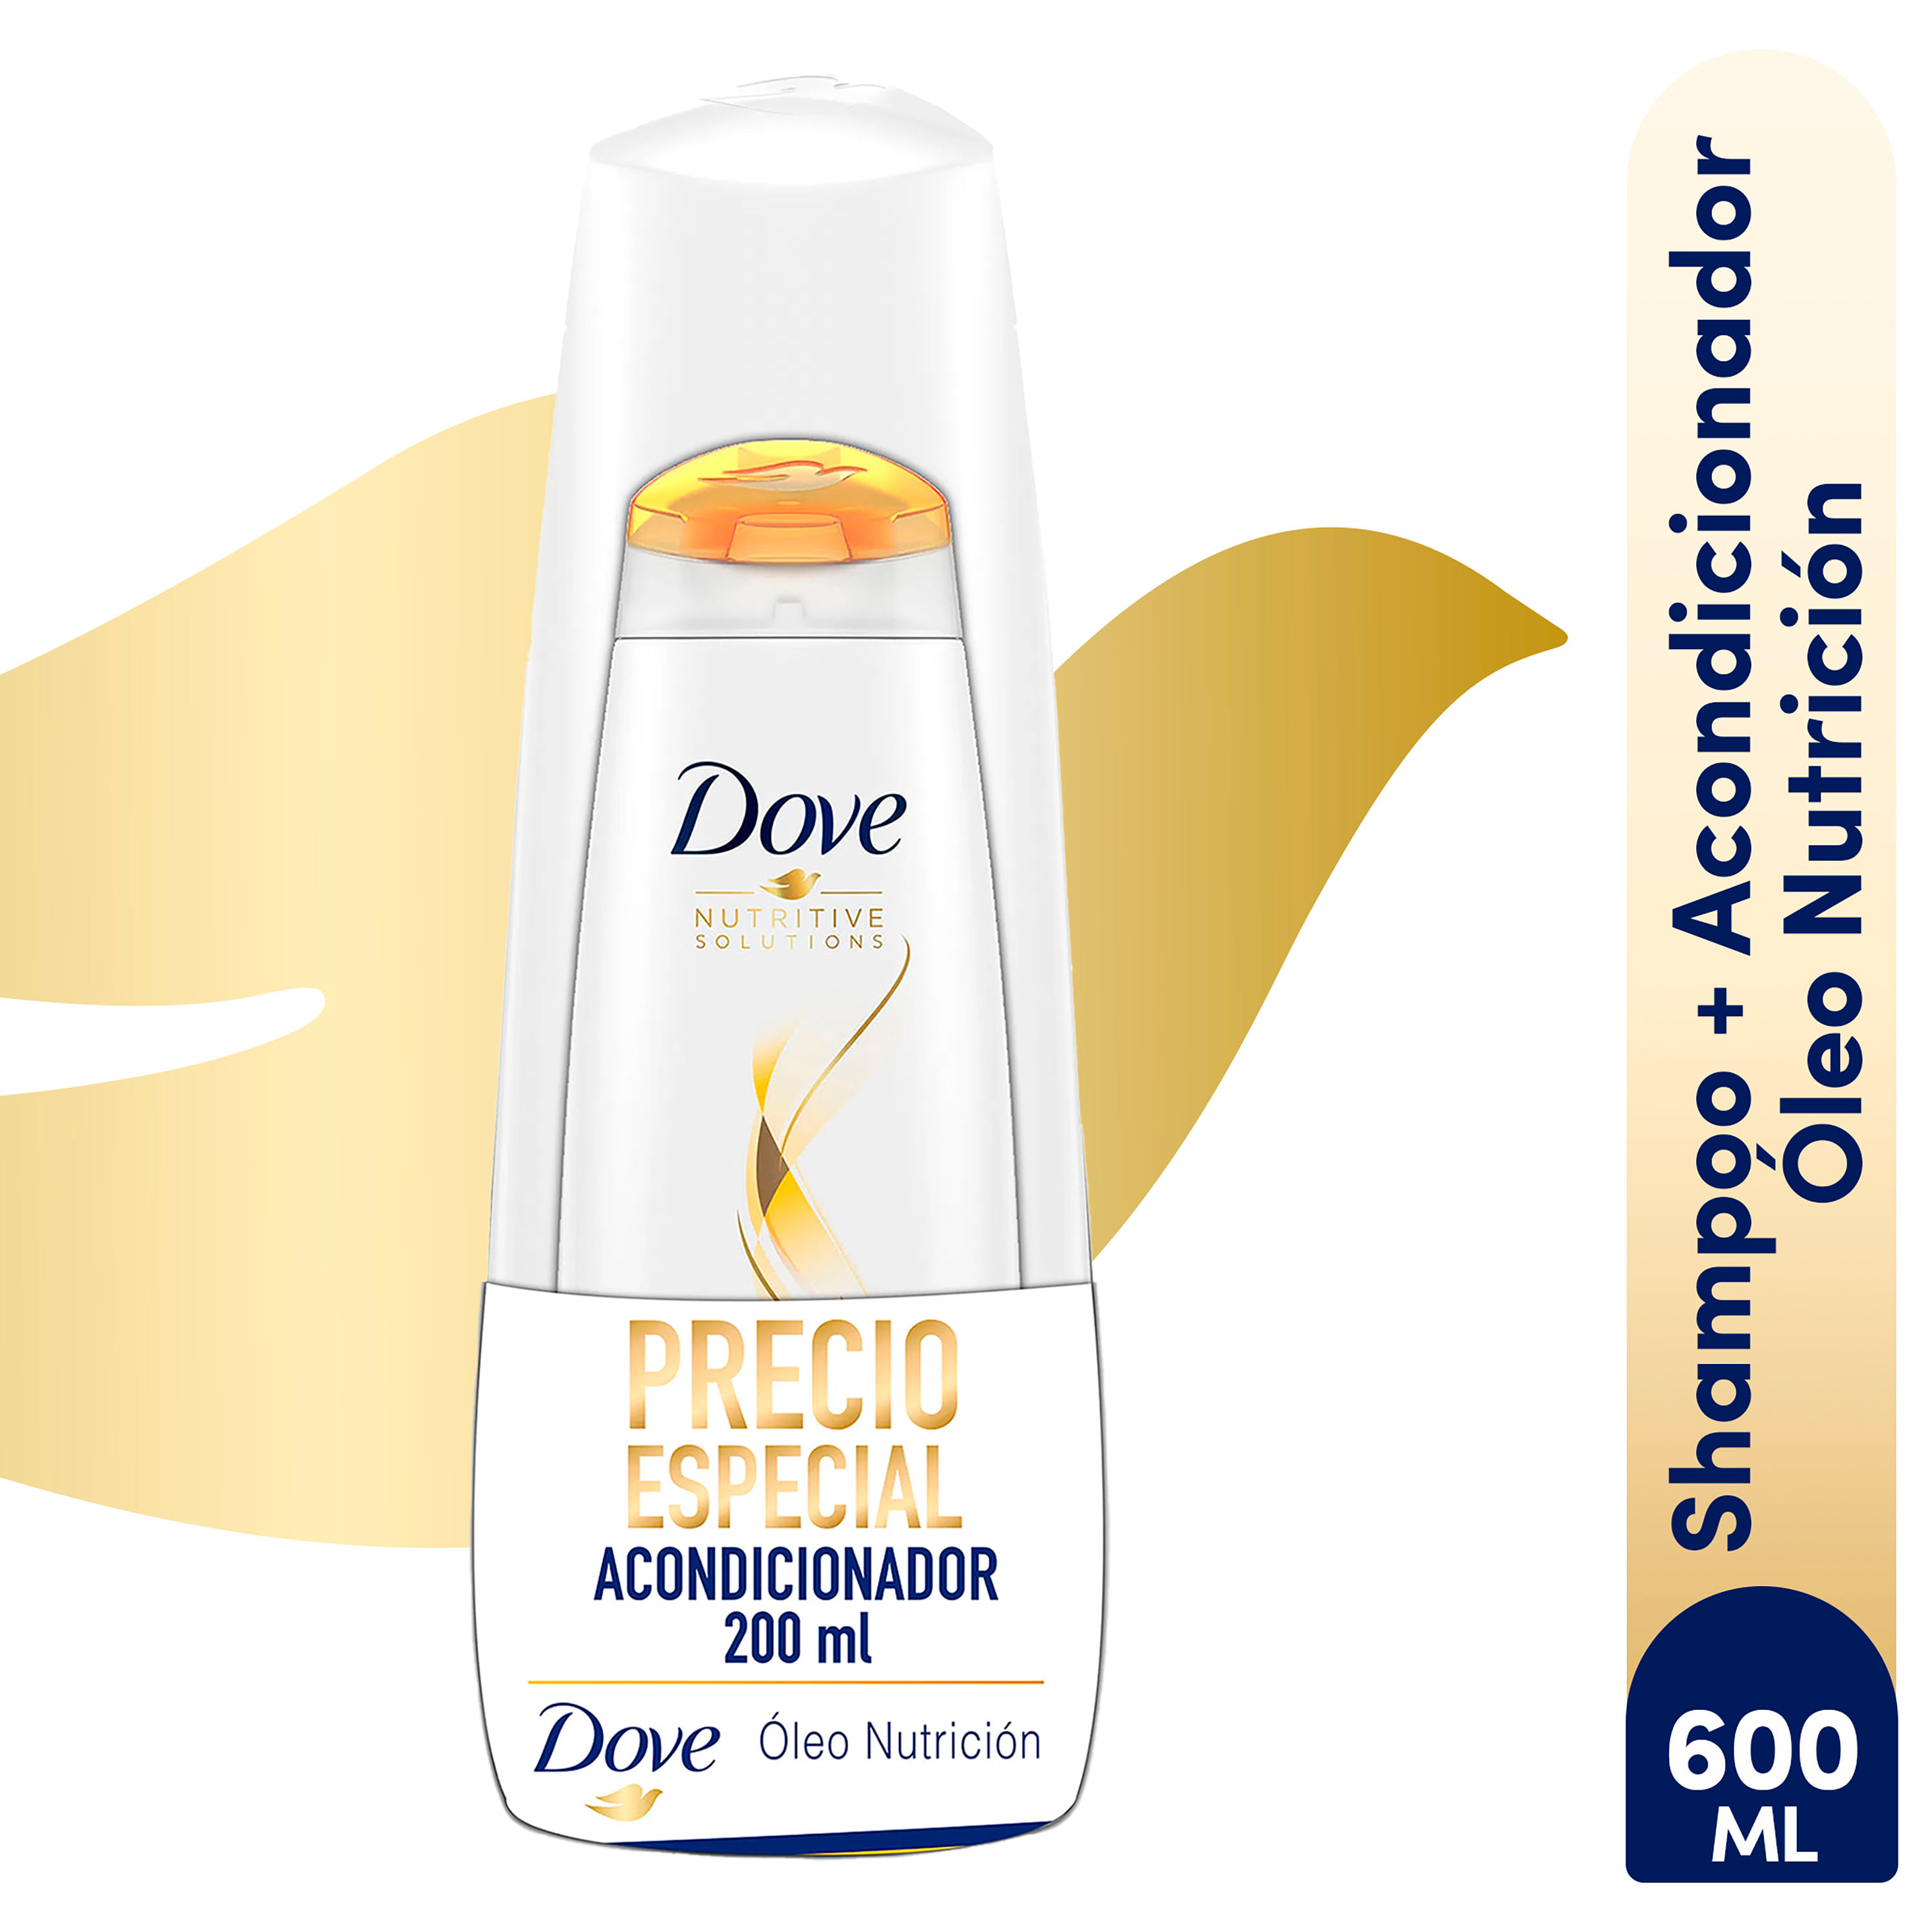 Shampoo-Dove-Oleo-Nutricion-400ml-Acondicionador-200ml-1-17516